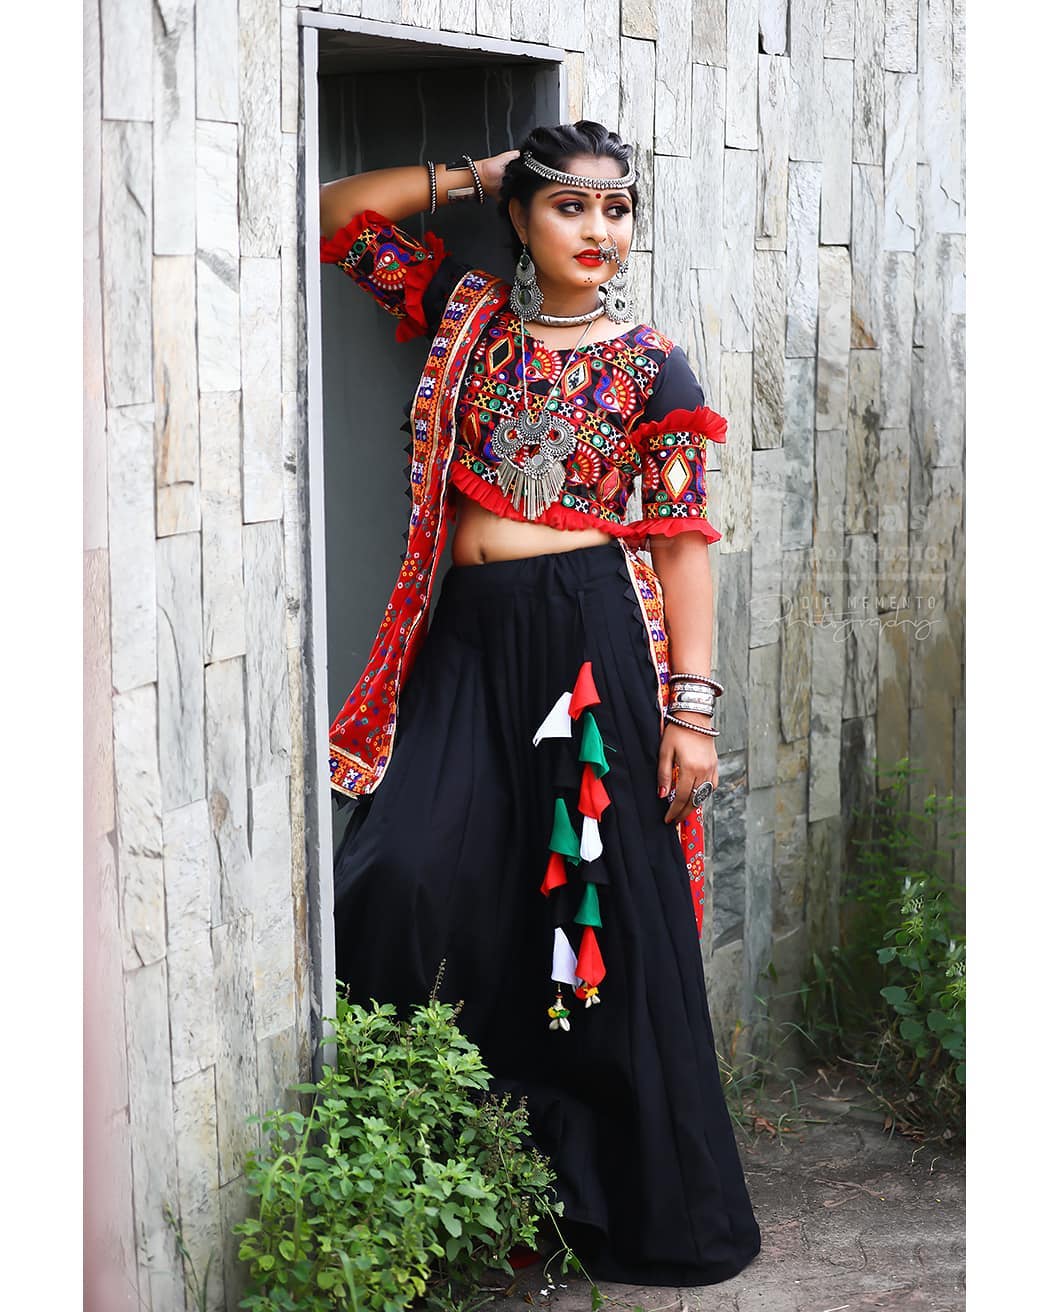 You can't spell 
A W E S O M E without this 
#Mua, #Garments and obv. Me. 
#navratri2k10 #navratri2019
.
.
.
 MUA: @dishapanchal246 
Shoot: @dip_memento_photography
@meandmyphotography11
 InFrame: @shrutigoswami51 
Costume by: @rashmithummar

#navratri2019 #photoshoot #ethnic #traditionalart #ahmedabad #gujarati  #pop #makeup #navratrichaniyacholi #chaniyacholi #indianfashionblogger  #fashionblogger #makeuptutorial #weddingdress #swag  #instapic #bollywood #bollywoodhotness #bollywoodactresses #indian #pic #picoftheday #photooftheday ##instagood#instamood #festivalofnations #festival